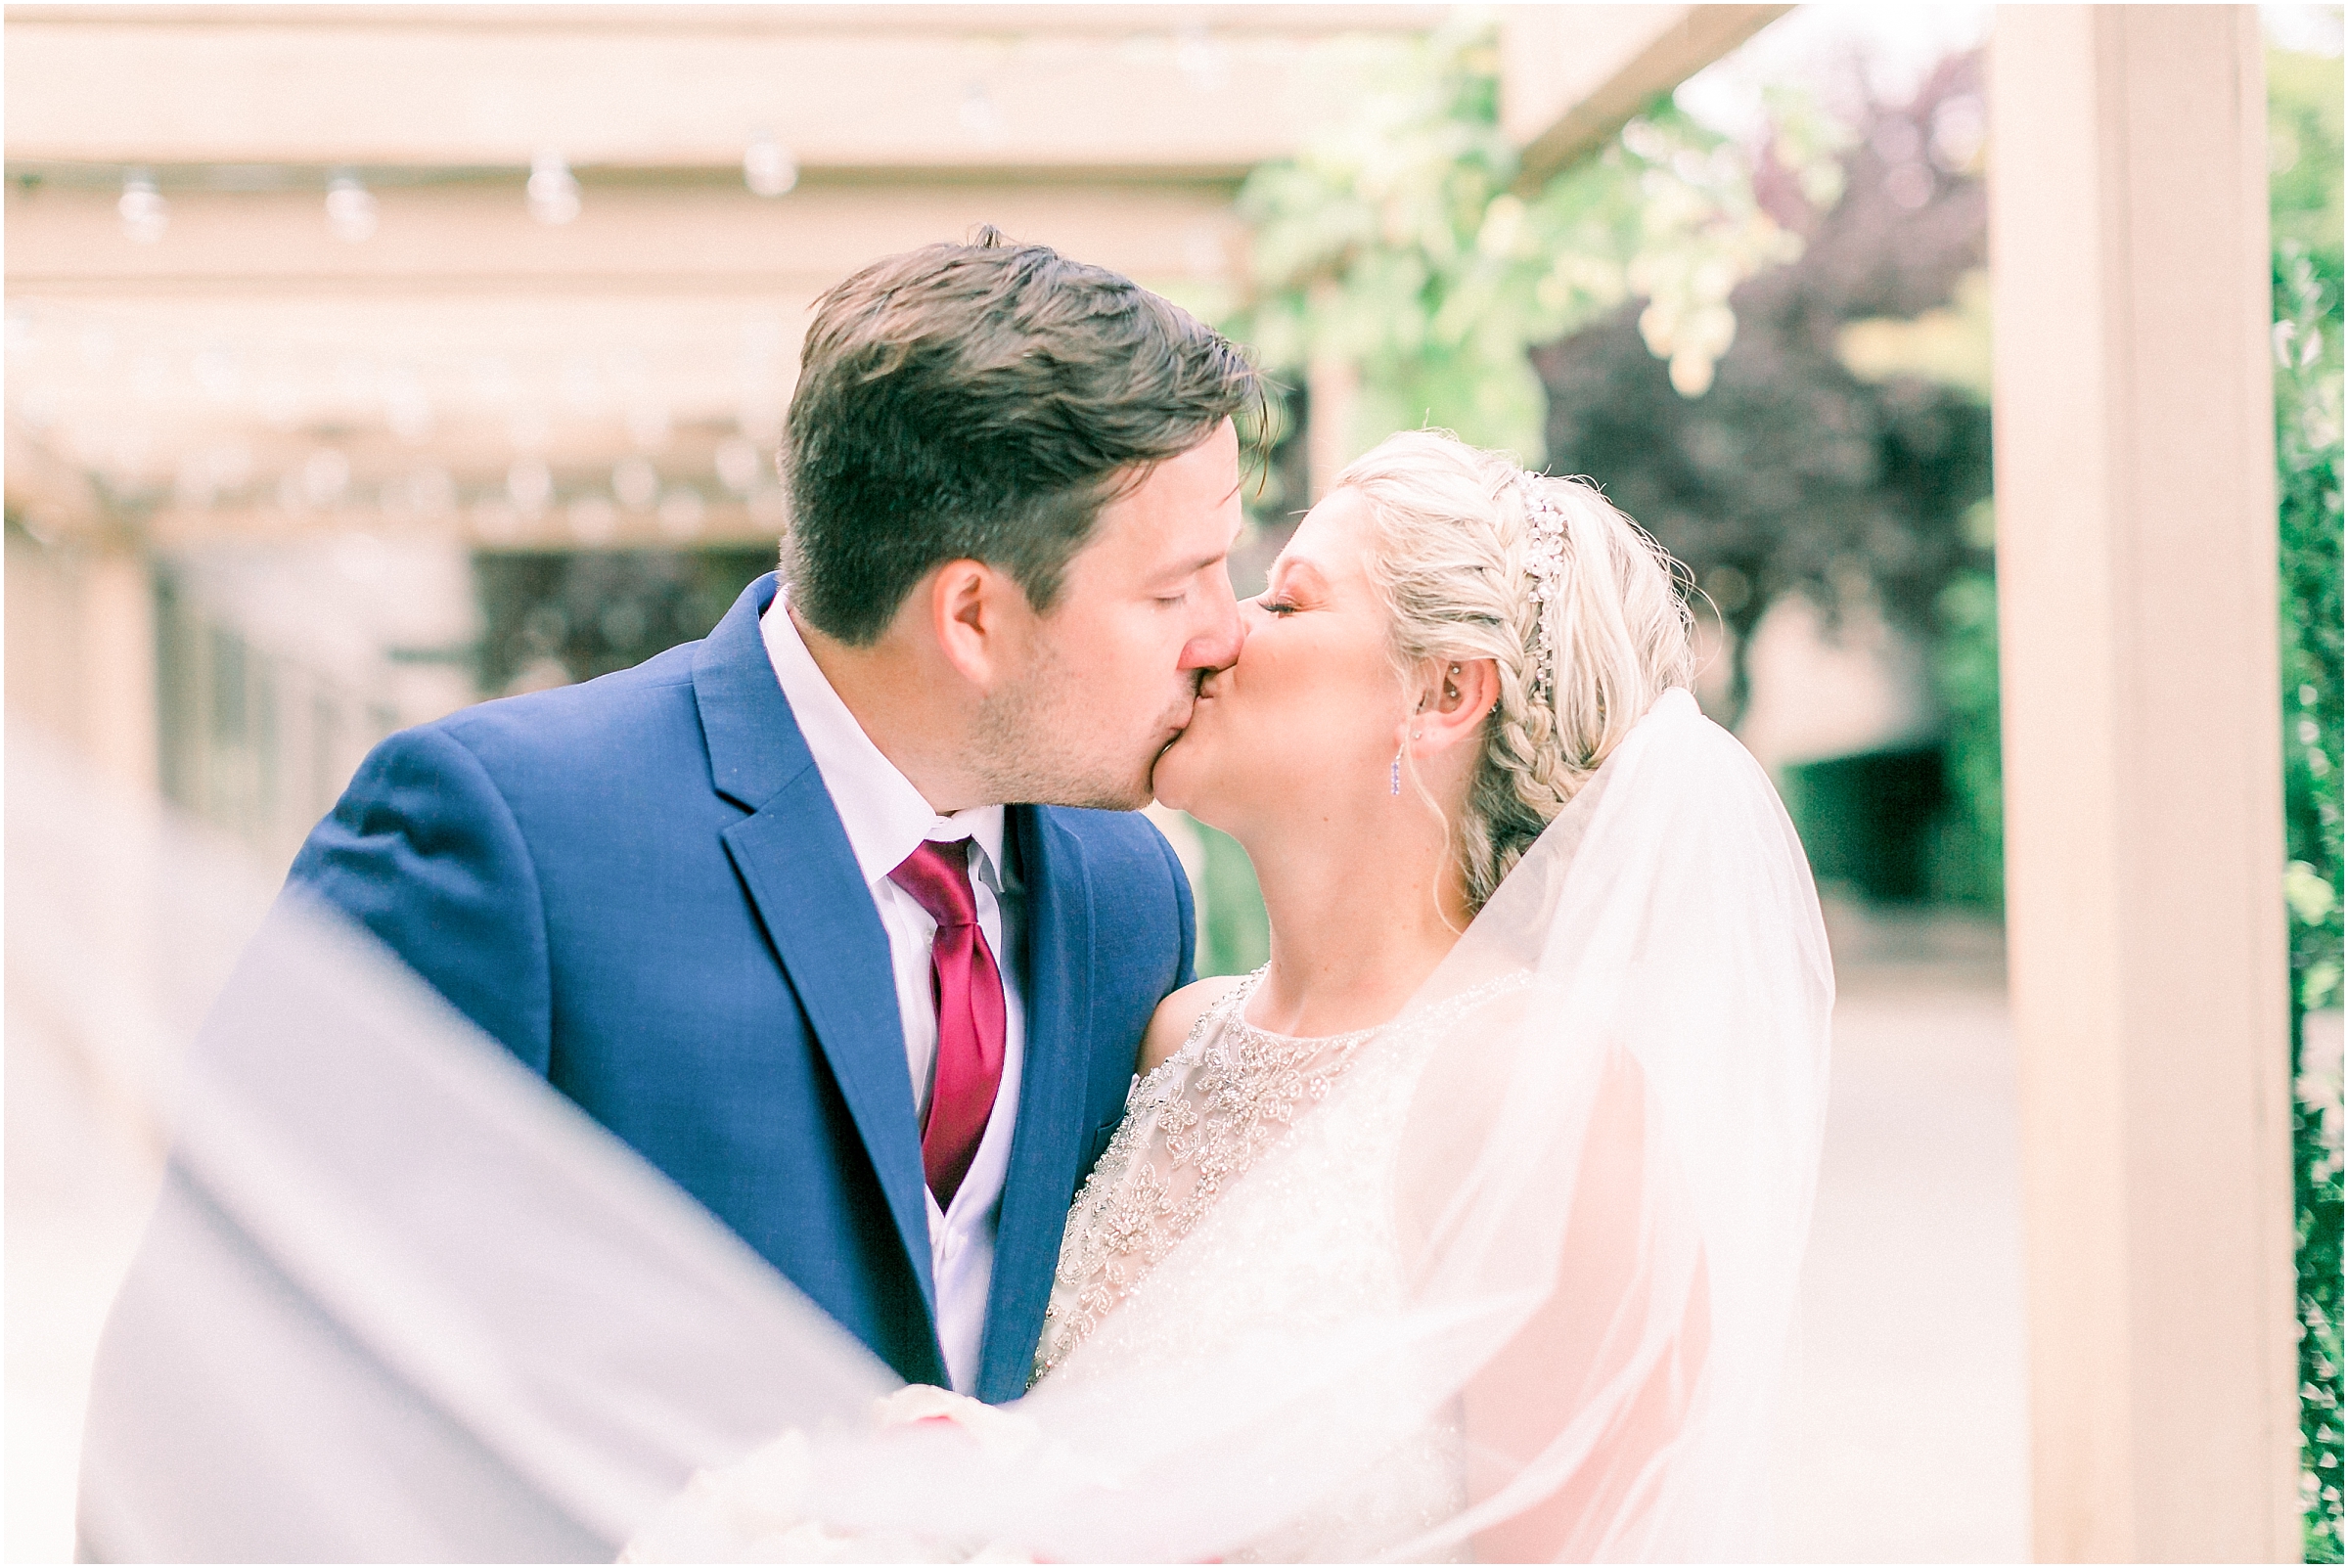 Lord Hill Farms Intimate Wedding | Stephen & Robyn